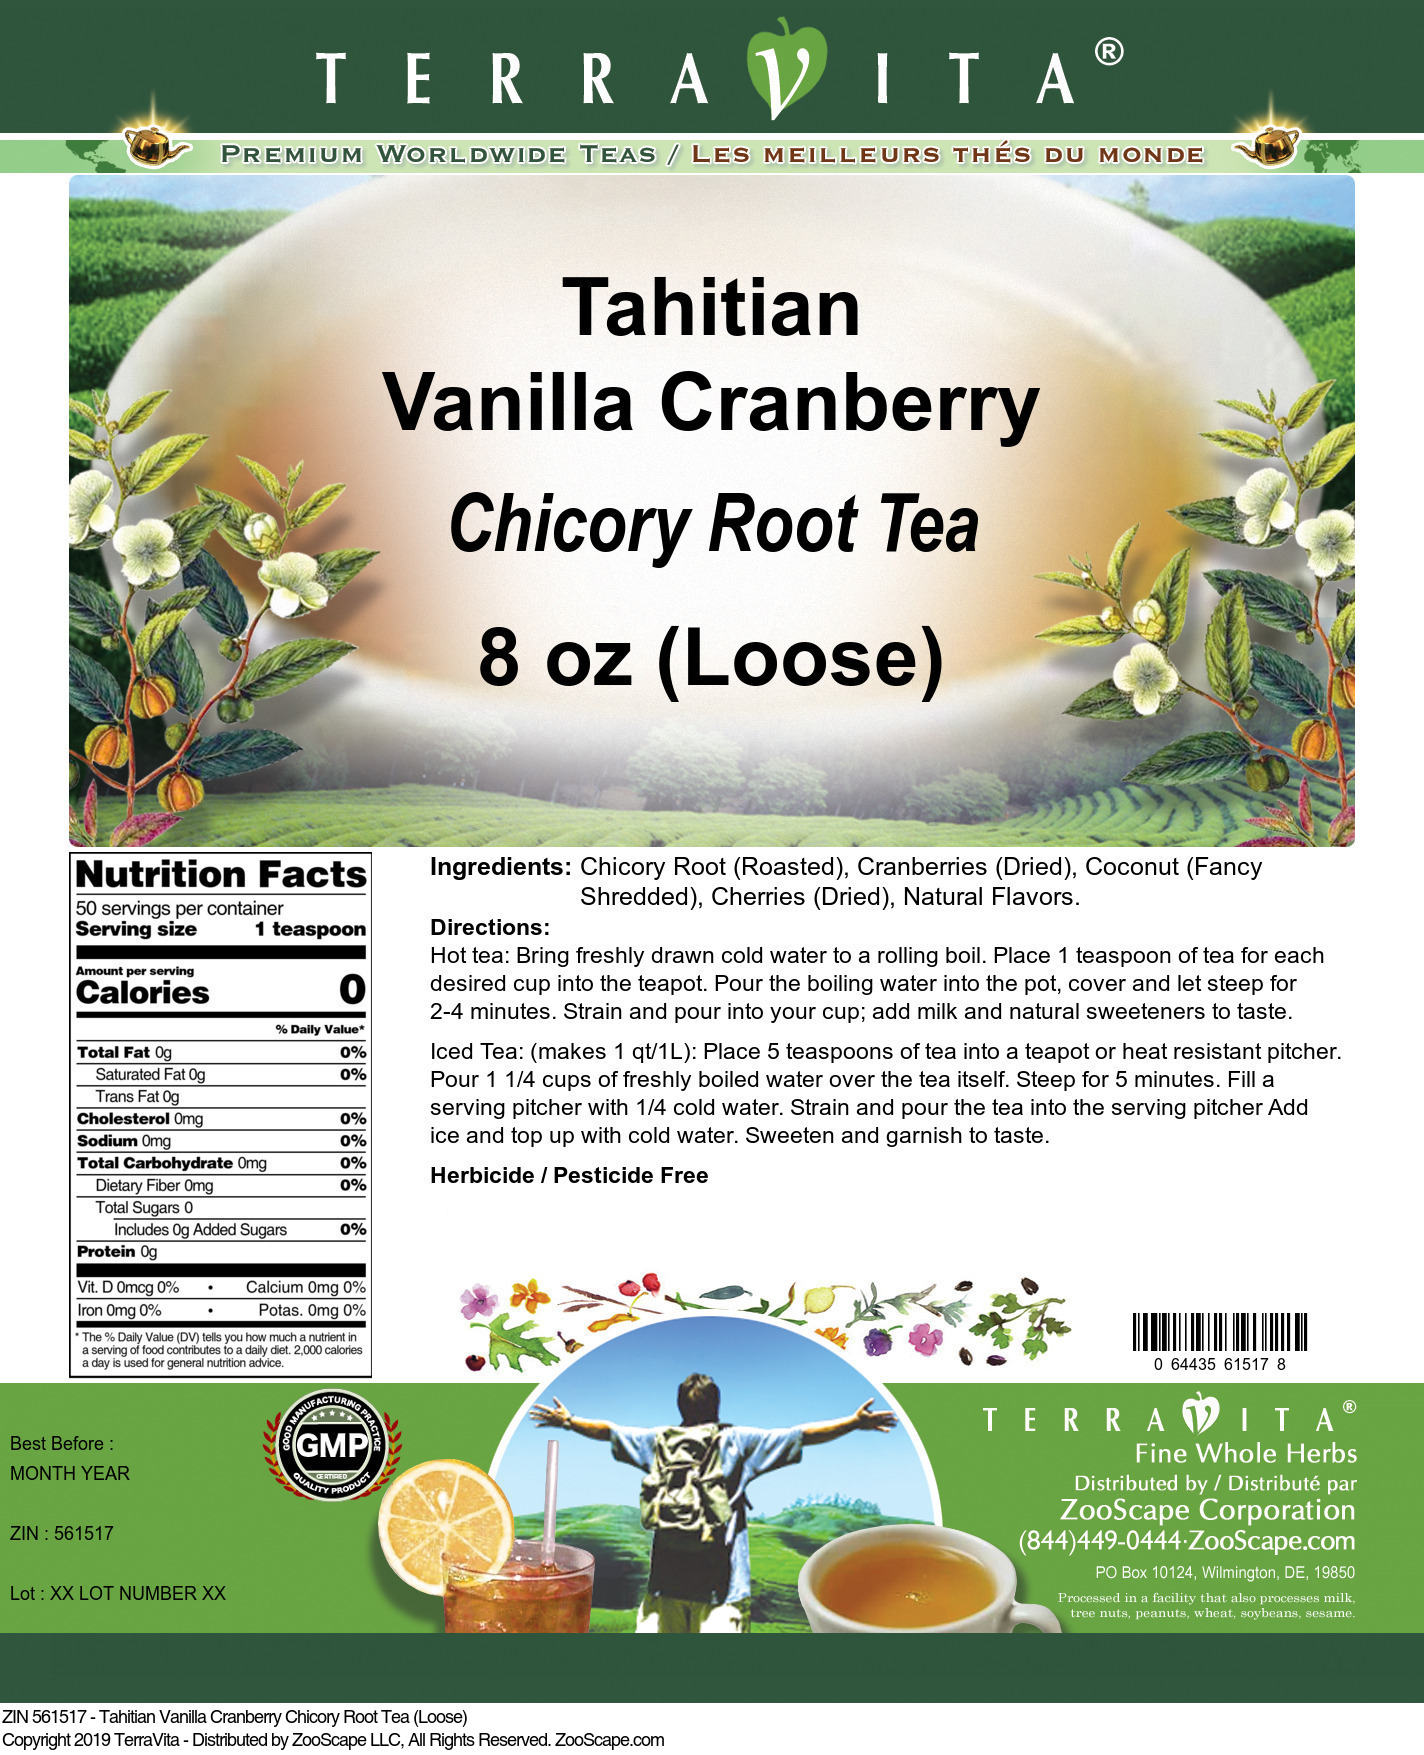 Tahitian Vanilla Cranberry Chicory Root Tea (Loose) - Label